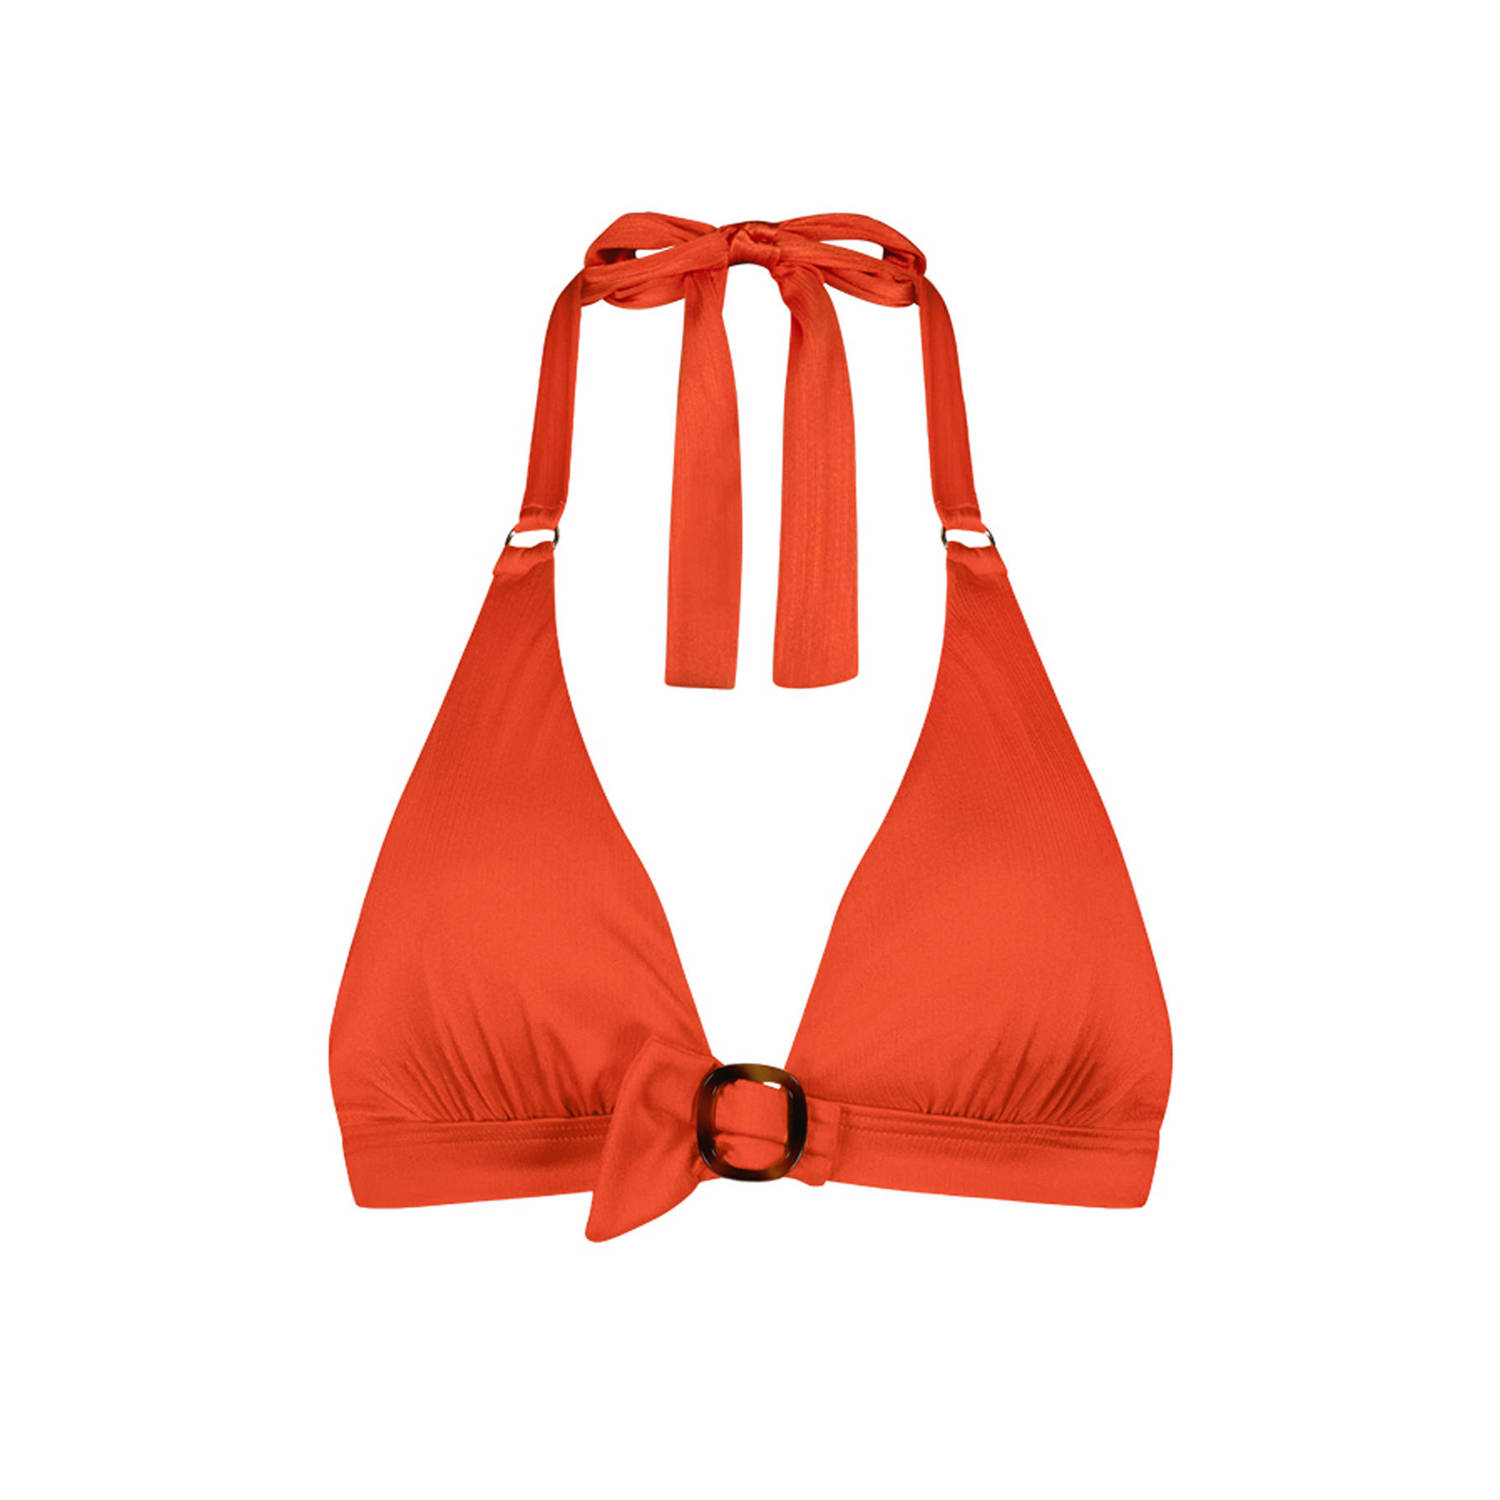 Cyell voorgevormde halter bikinitop oranje